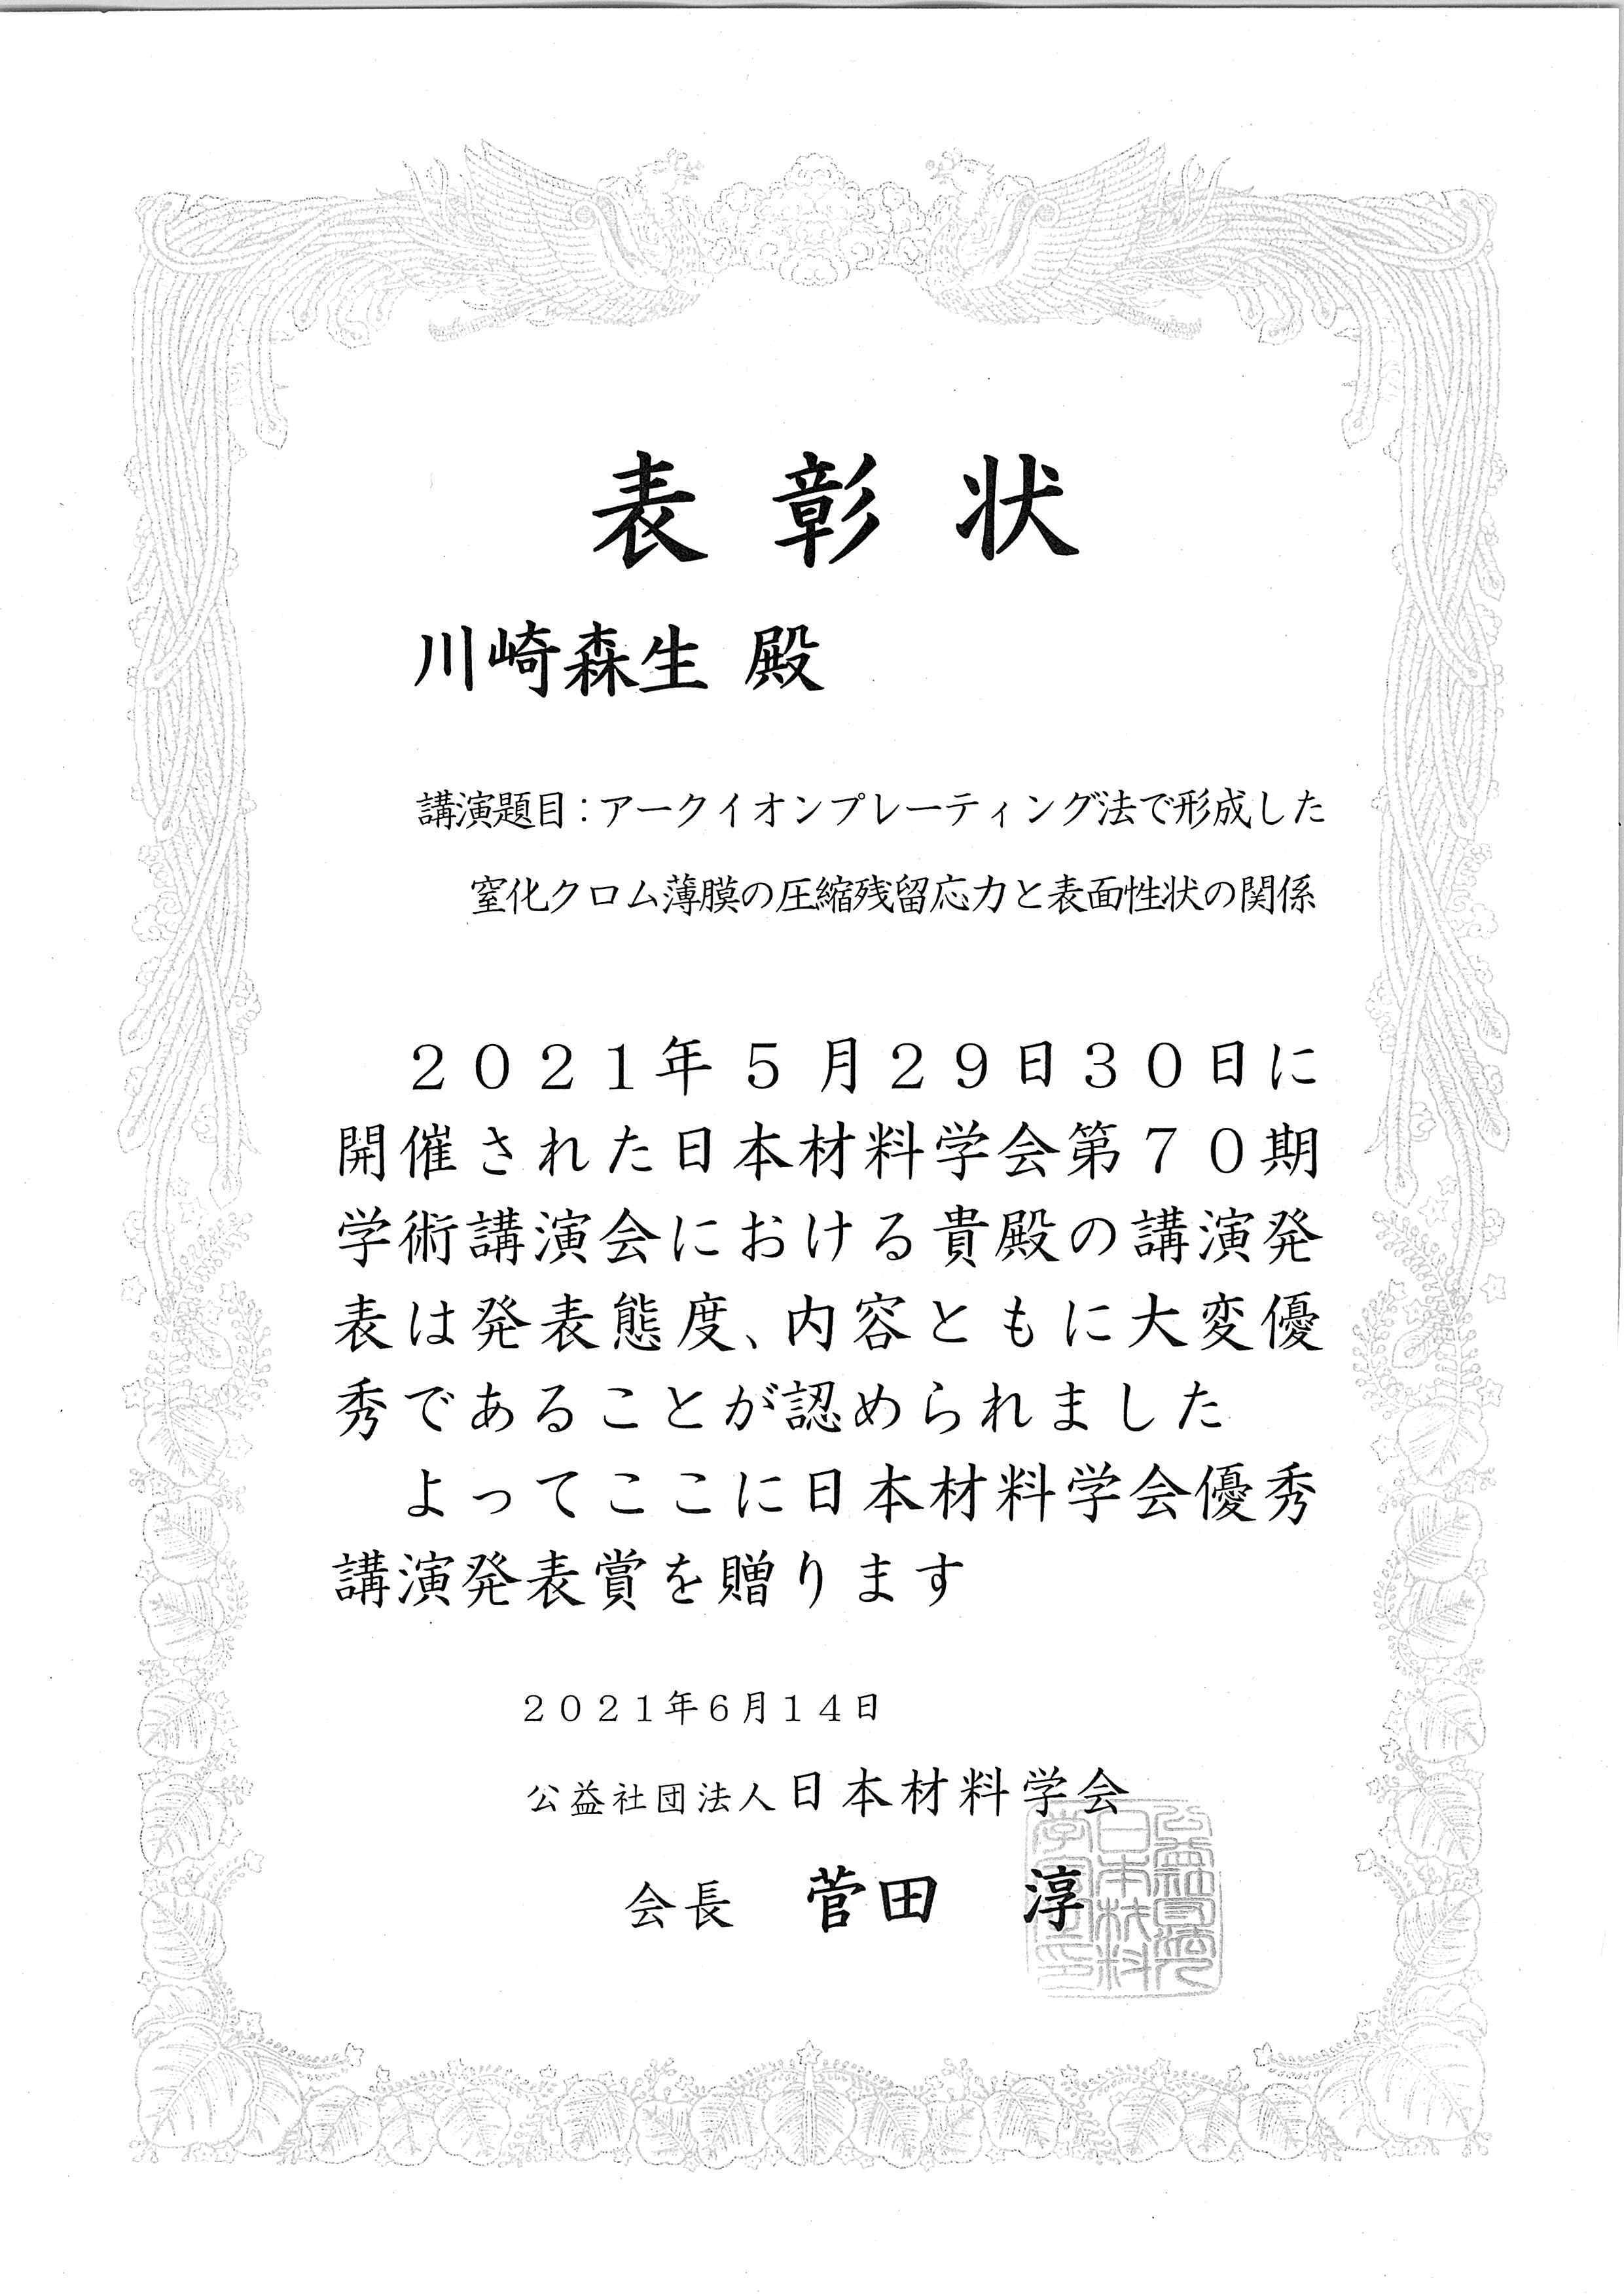 Kawasaki_Certificate.jpg